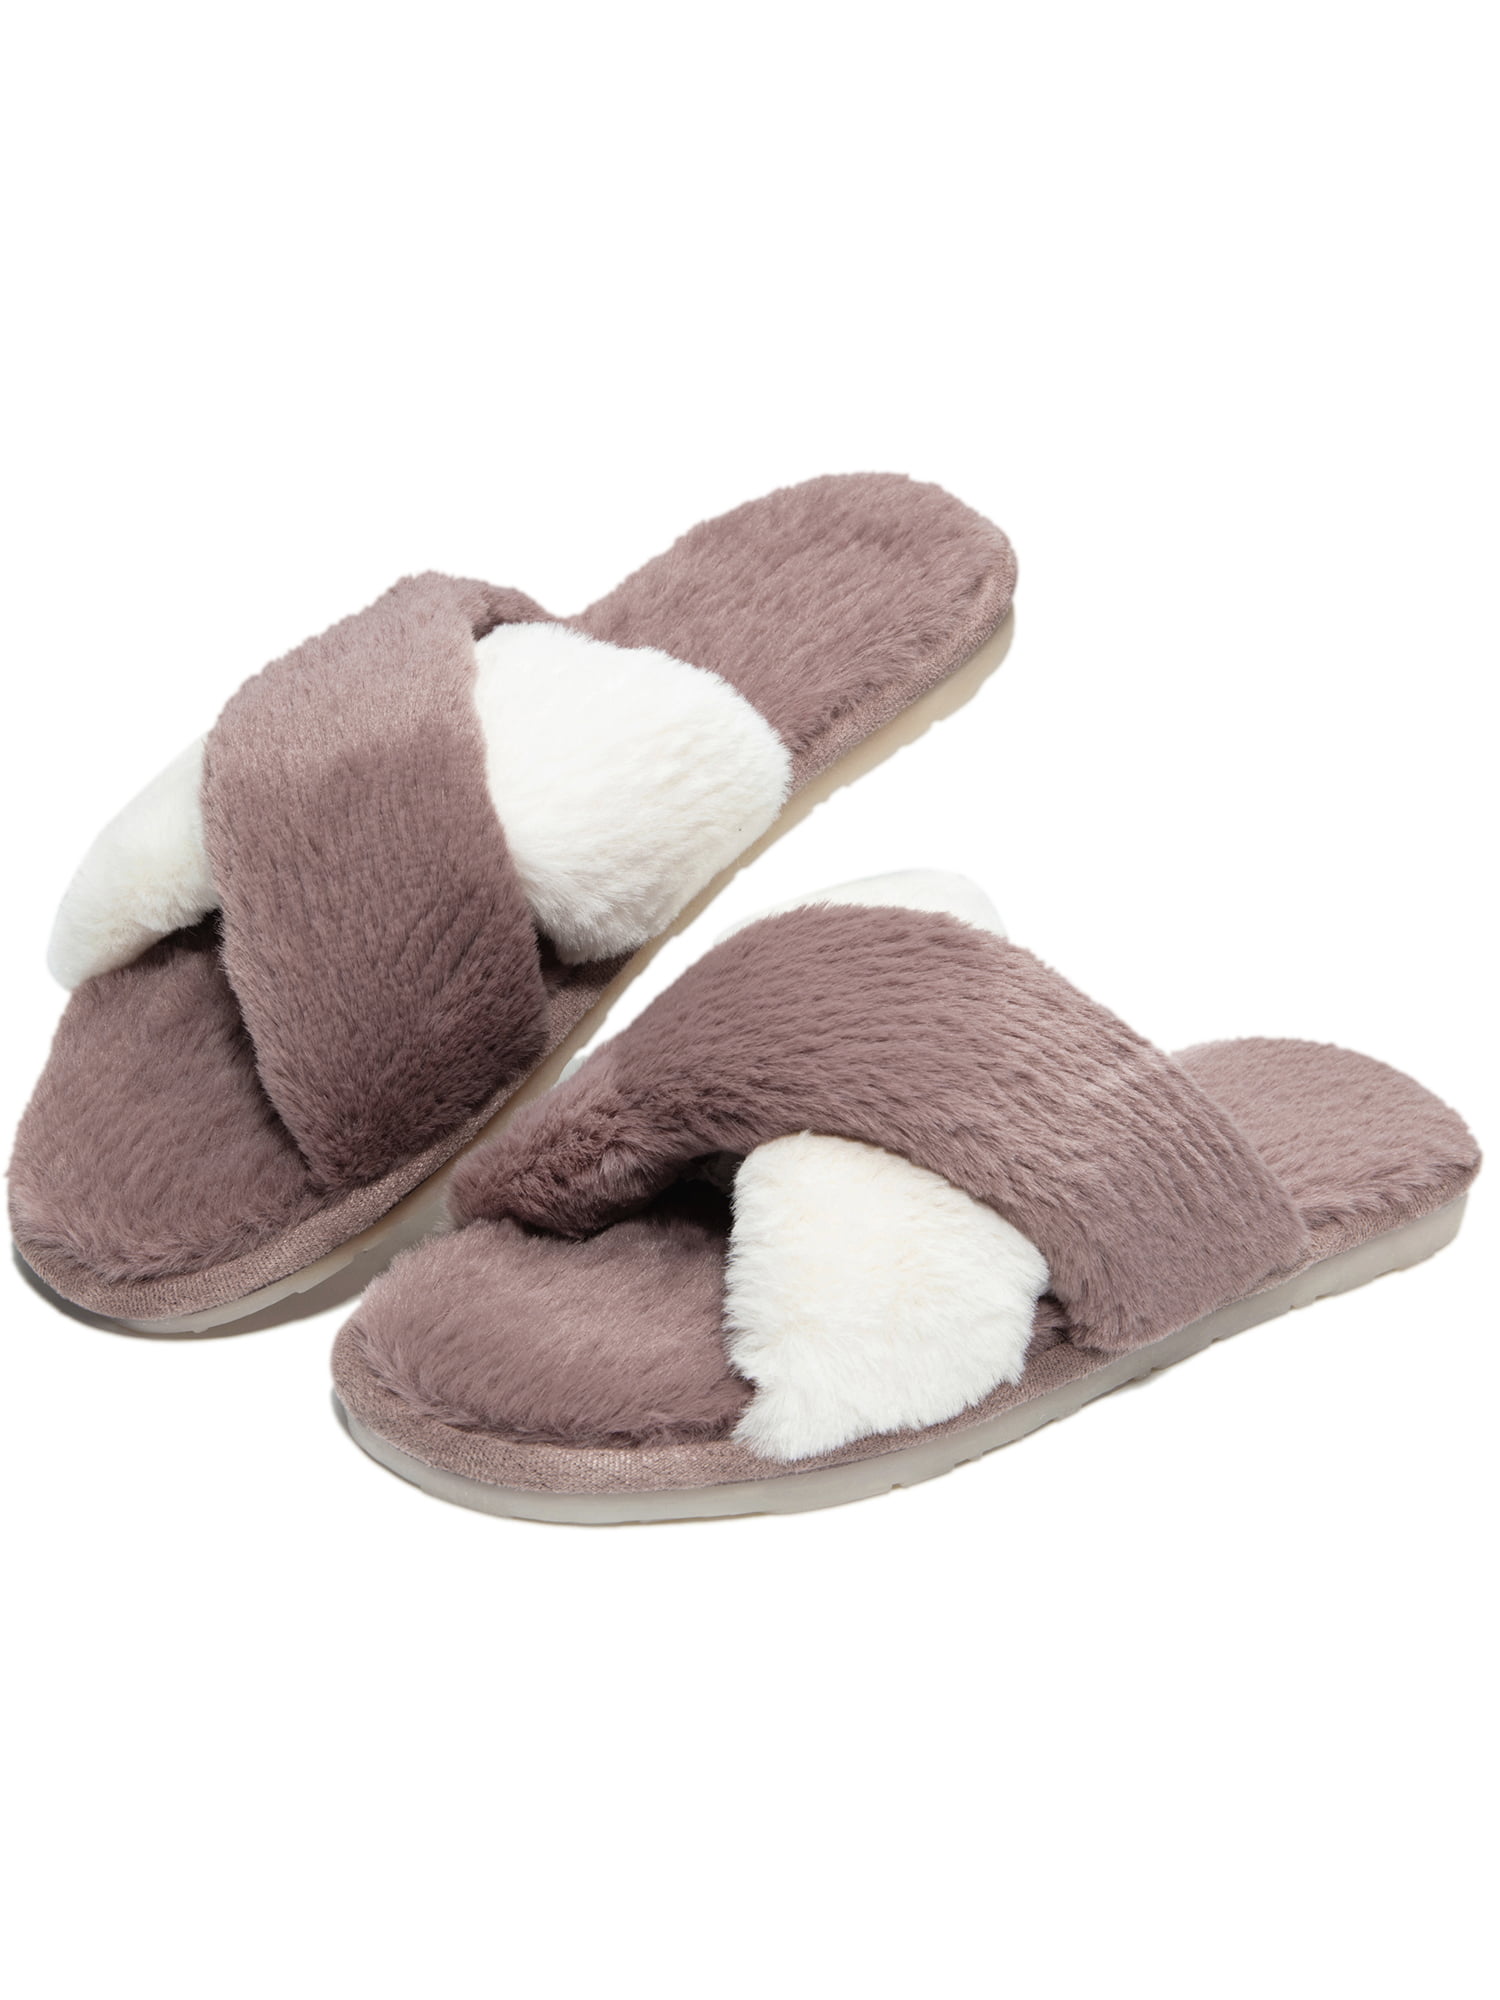 ONCAI Womens Slippers Memory Foam Fuzzy Furry House Ladies Slippers Anti-Slip Cozy Warm Faux Fur Bedroom Fluffy Slippers Women